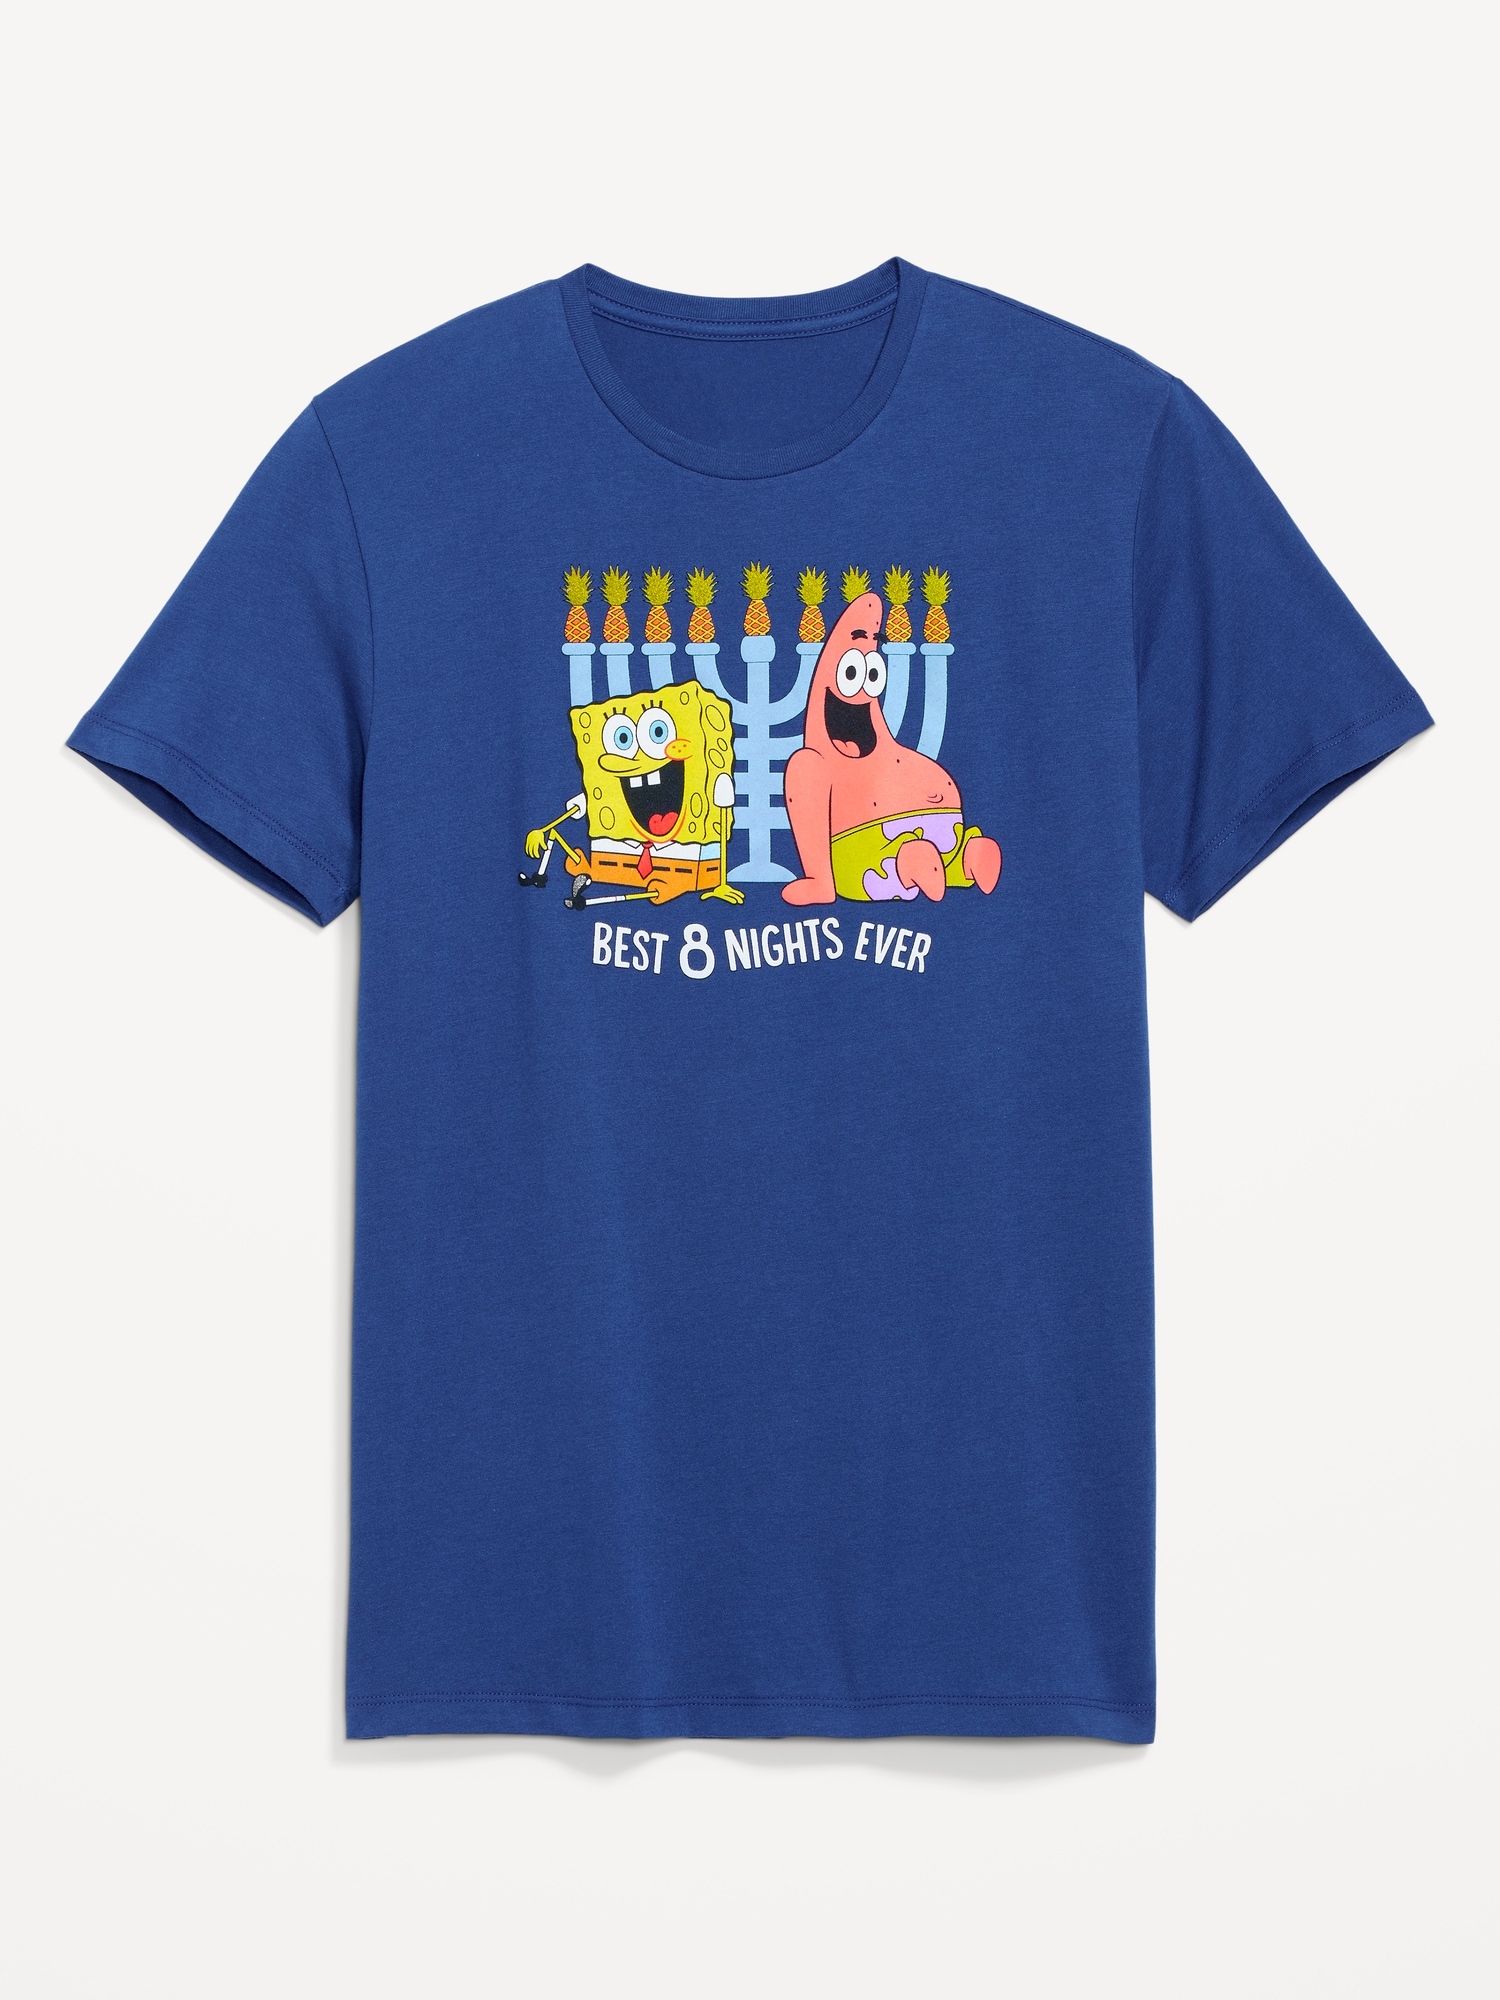 Spongebob Squarepants™ Best 8 Nights Ever Gender Neutral Hanukkah T Shirt For Adults Old Navy 4038